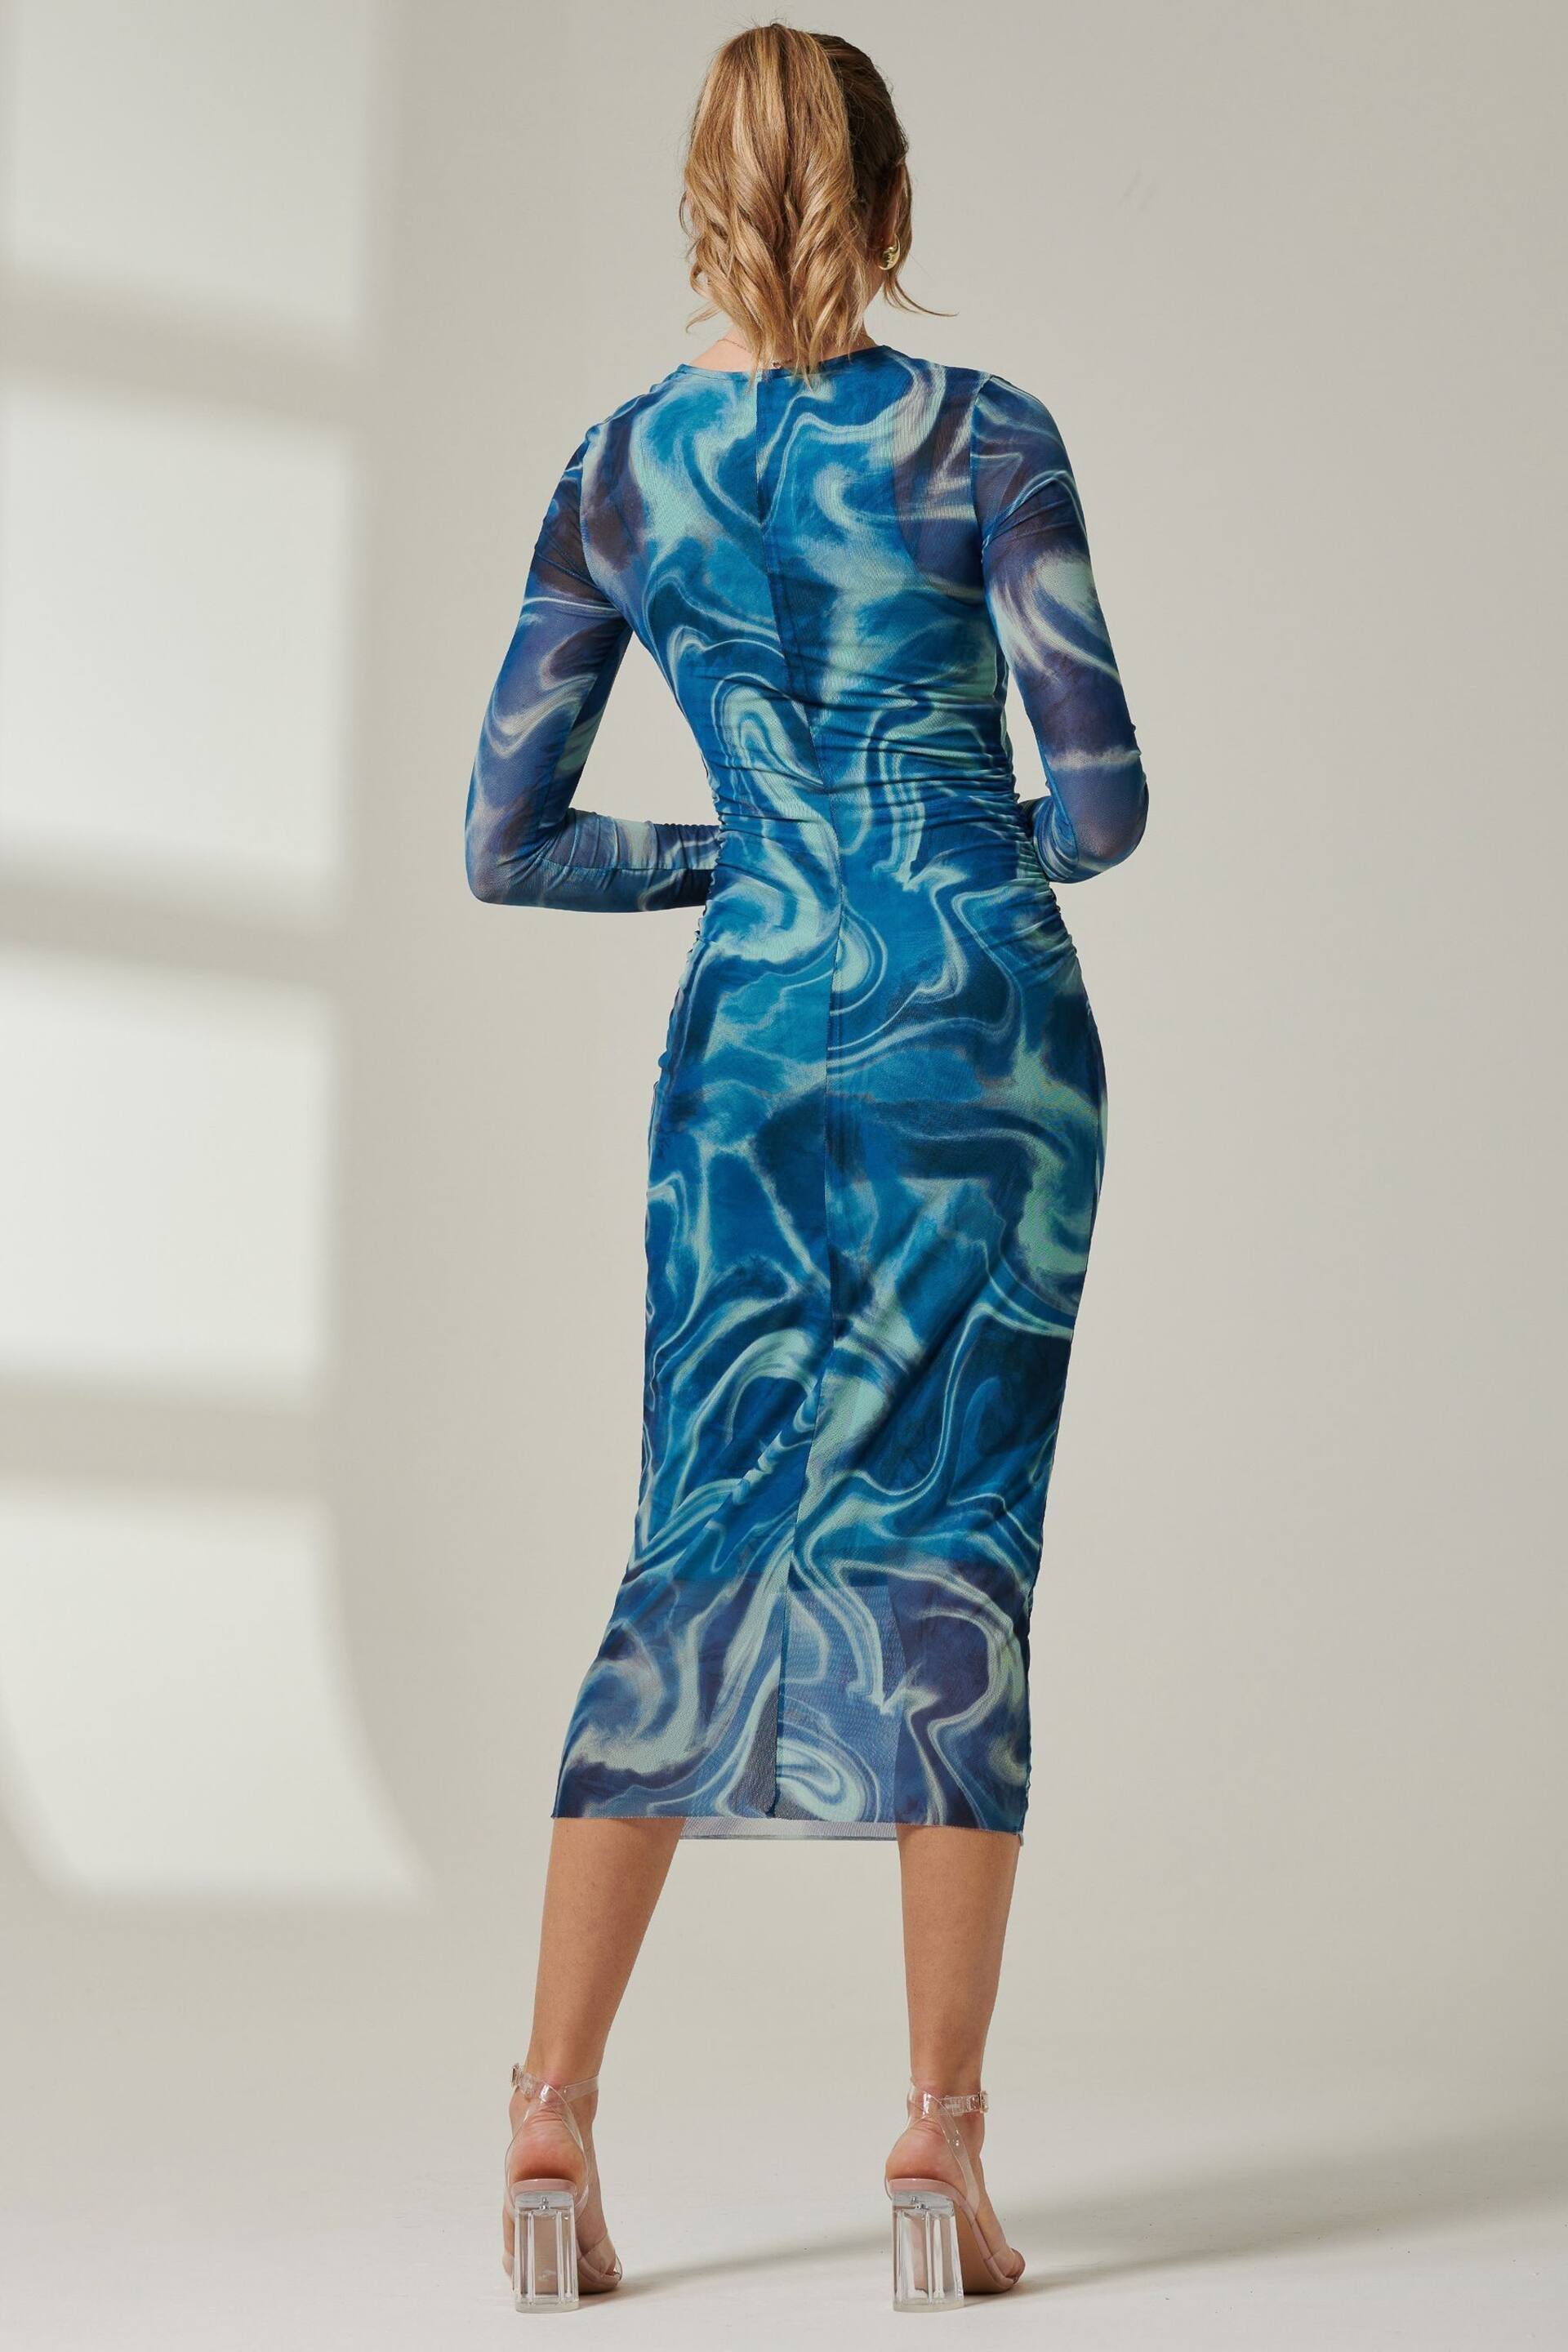 Jolie Moi Blue Mabyn Mesh Long Sleeve Midaxi Dress - Image 2 of 6